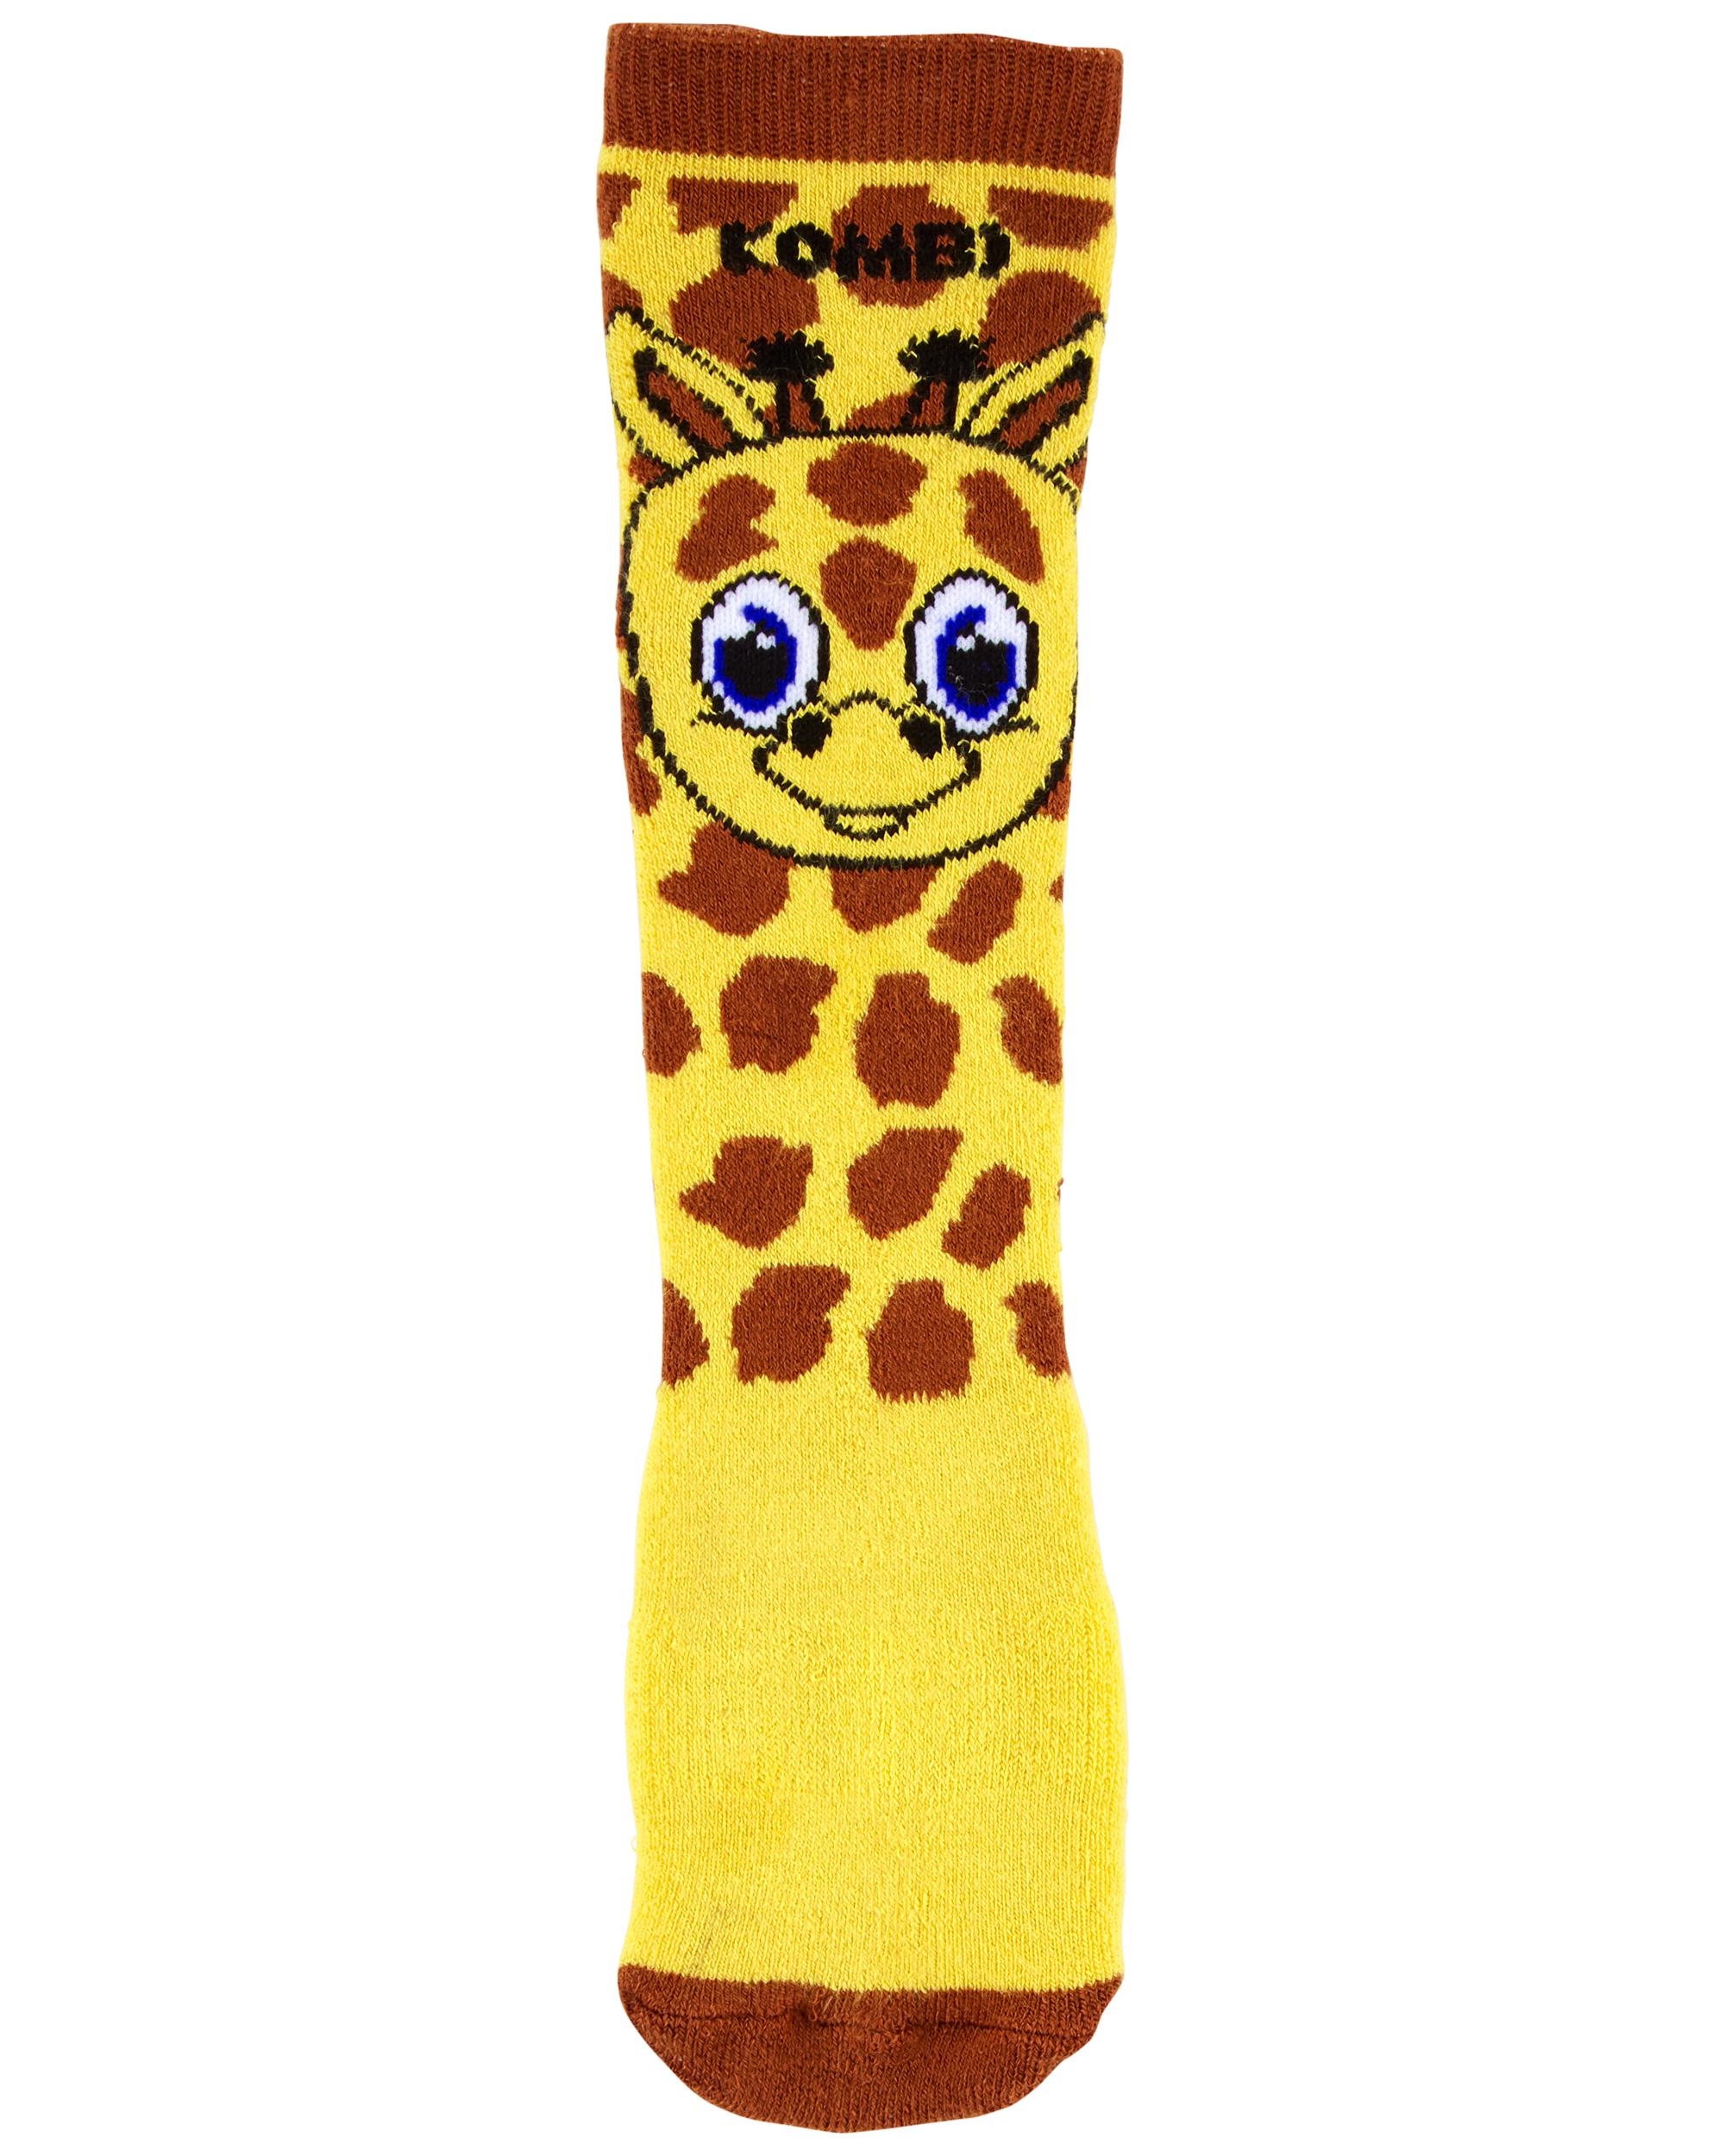 Tabio, Accessories, Japanese Socks With Giraffe